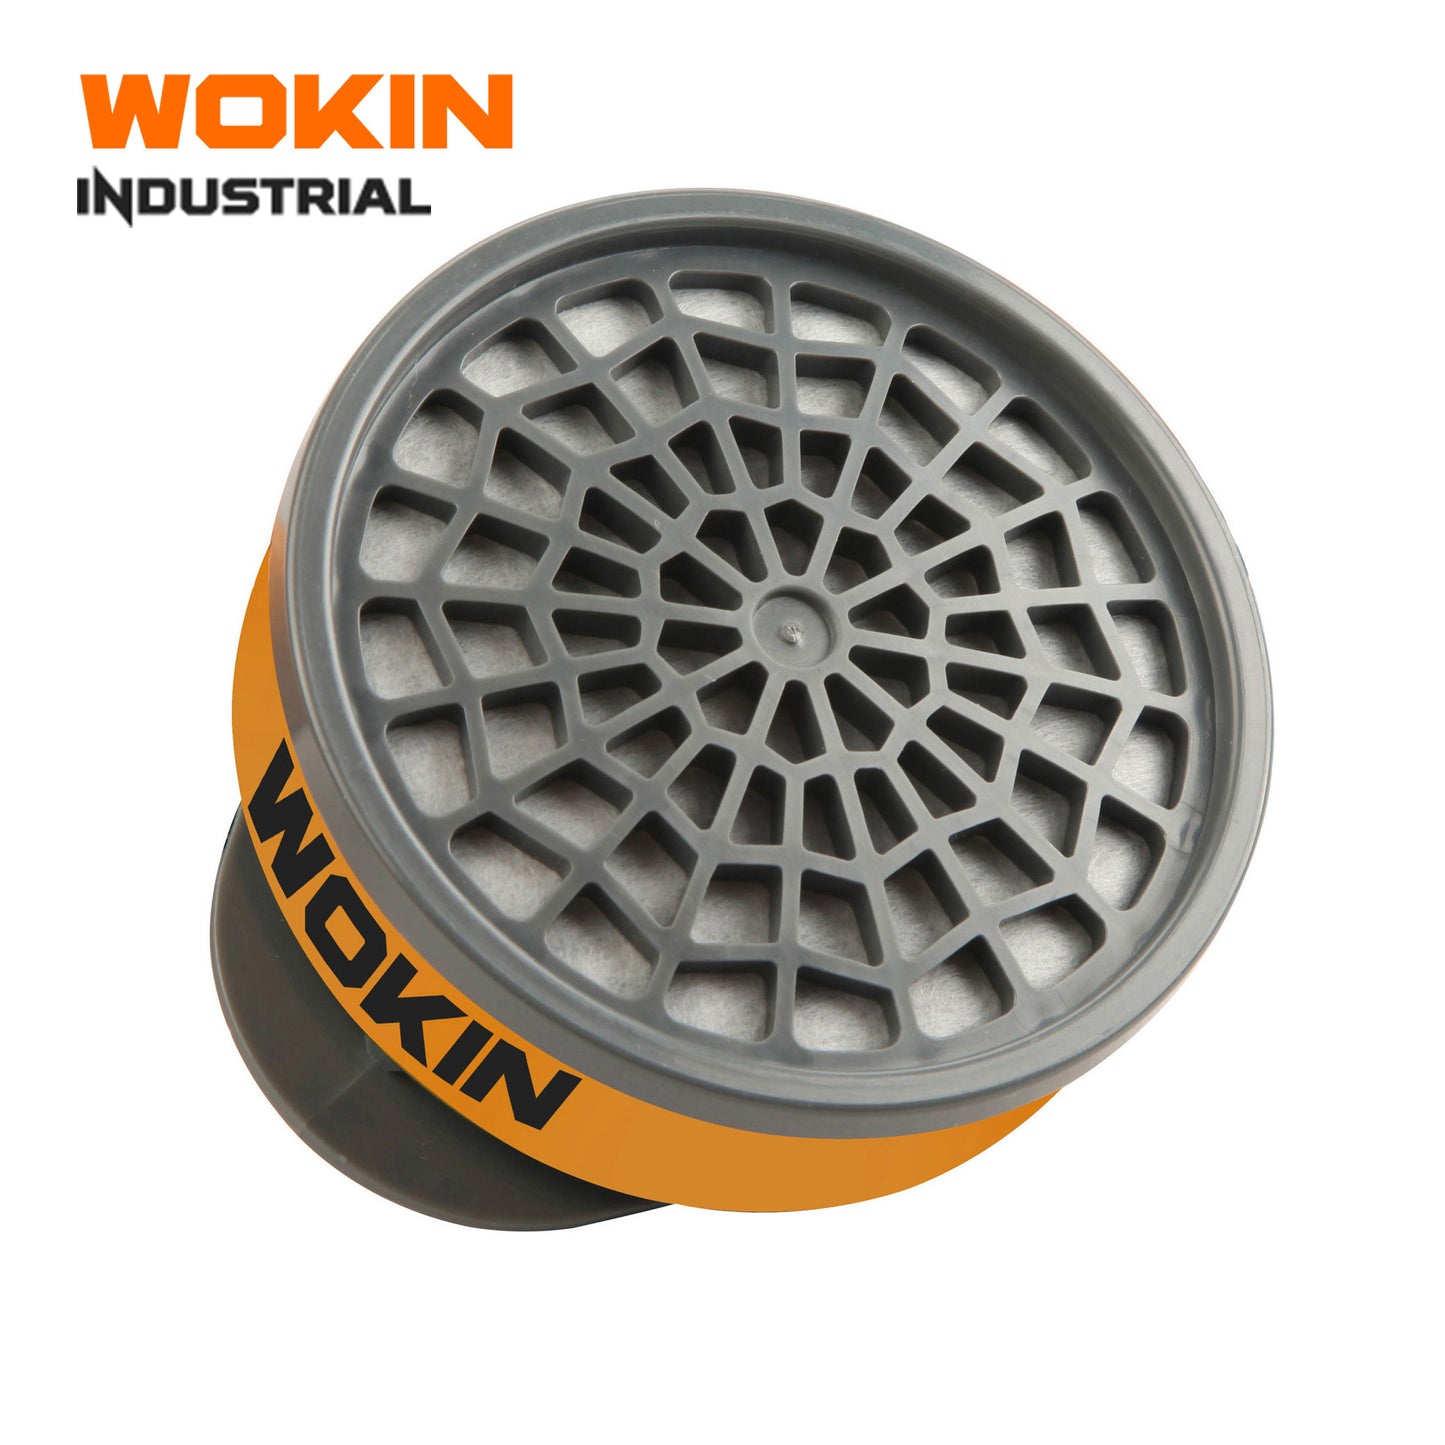 Wokin Particulate Filter Organic Vapor Relief Industrial